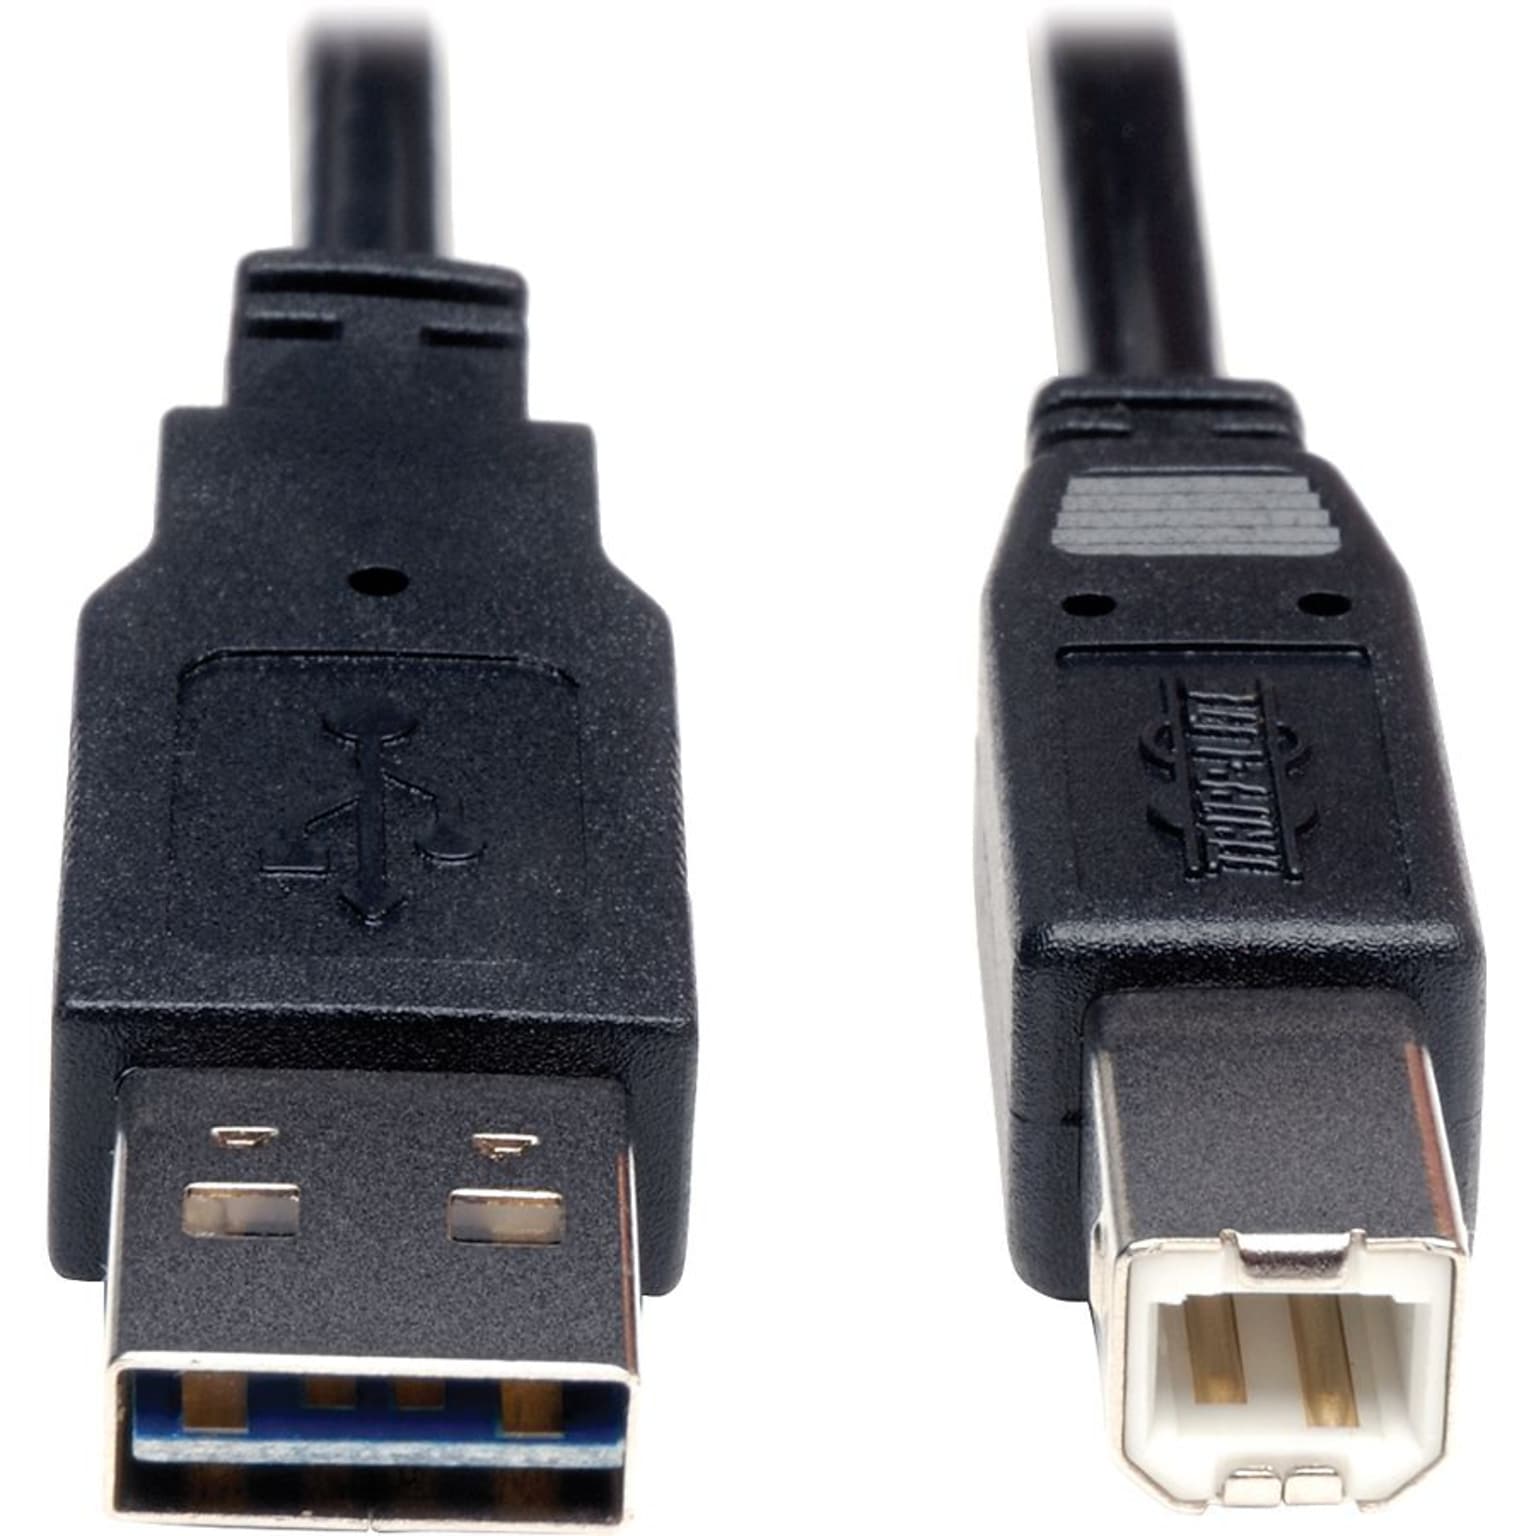 Tripp Lite 3 Universal Reversible USB 2.0 A/B Male USB Cable; Black